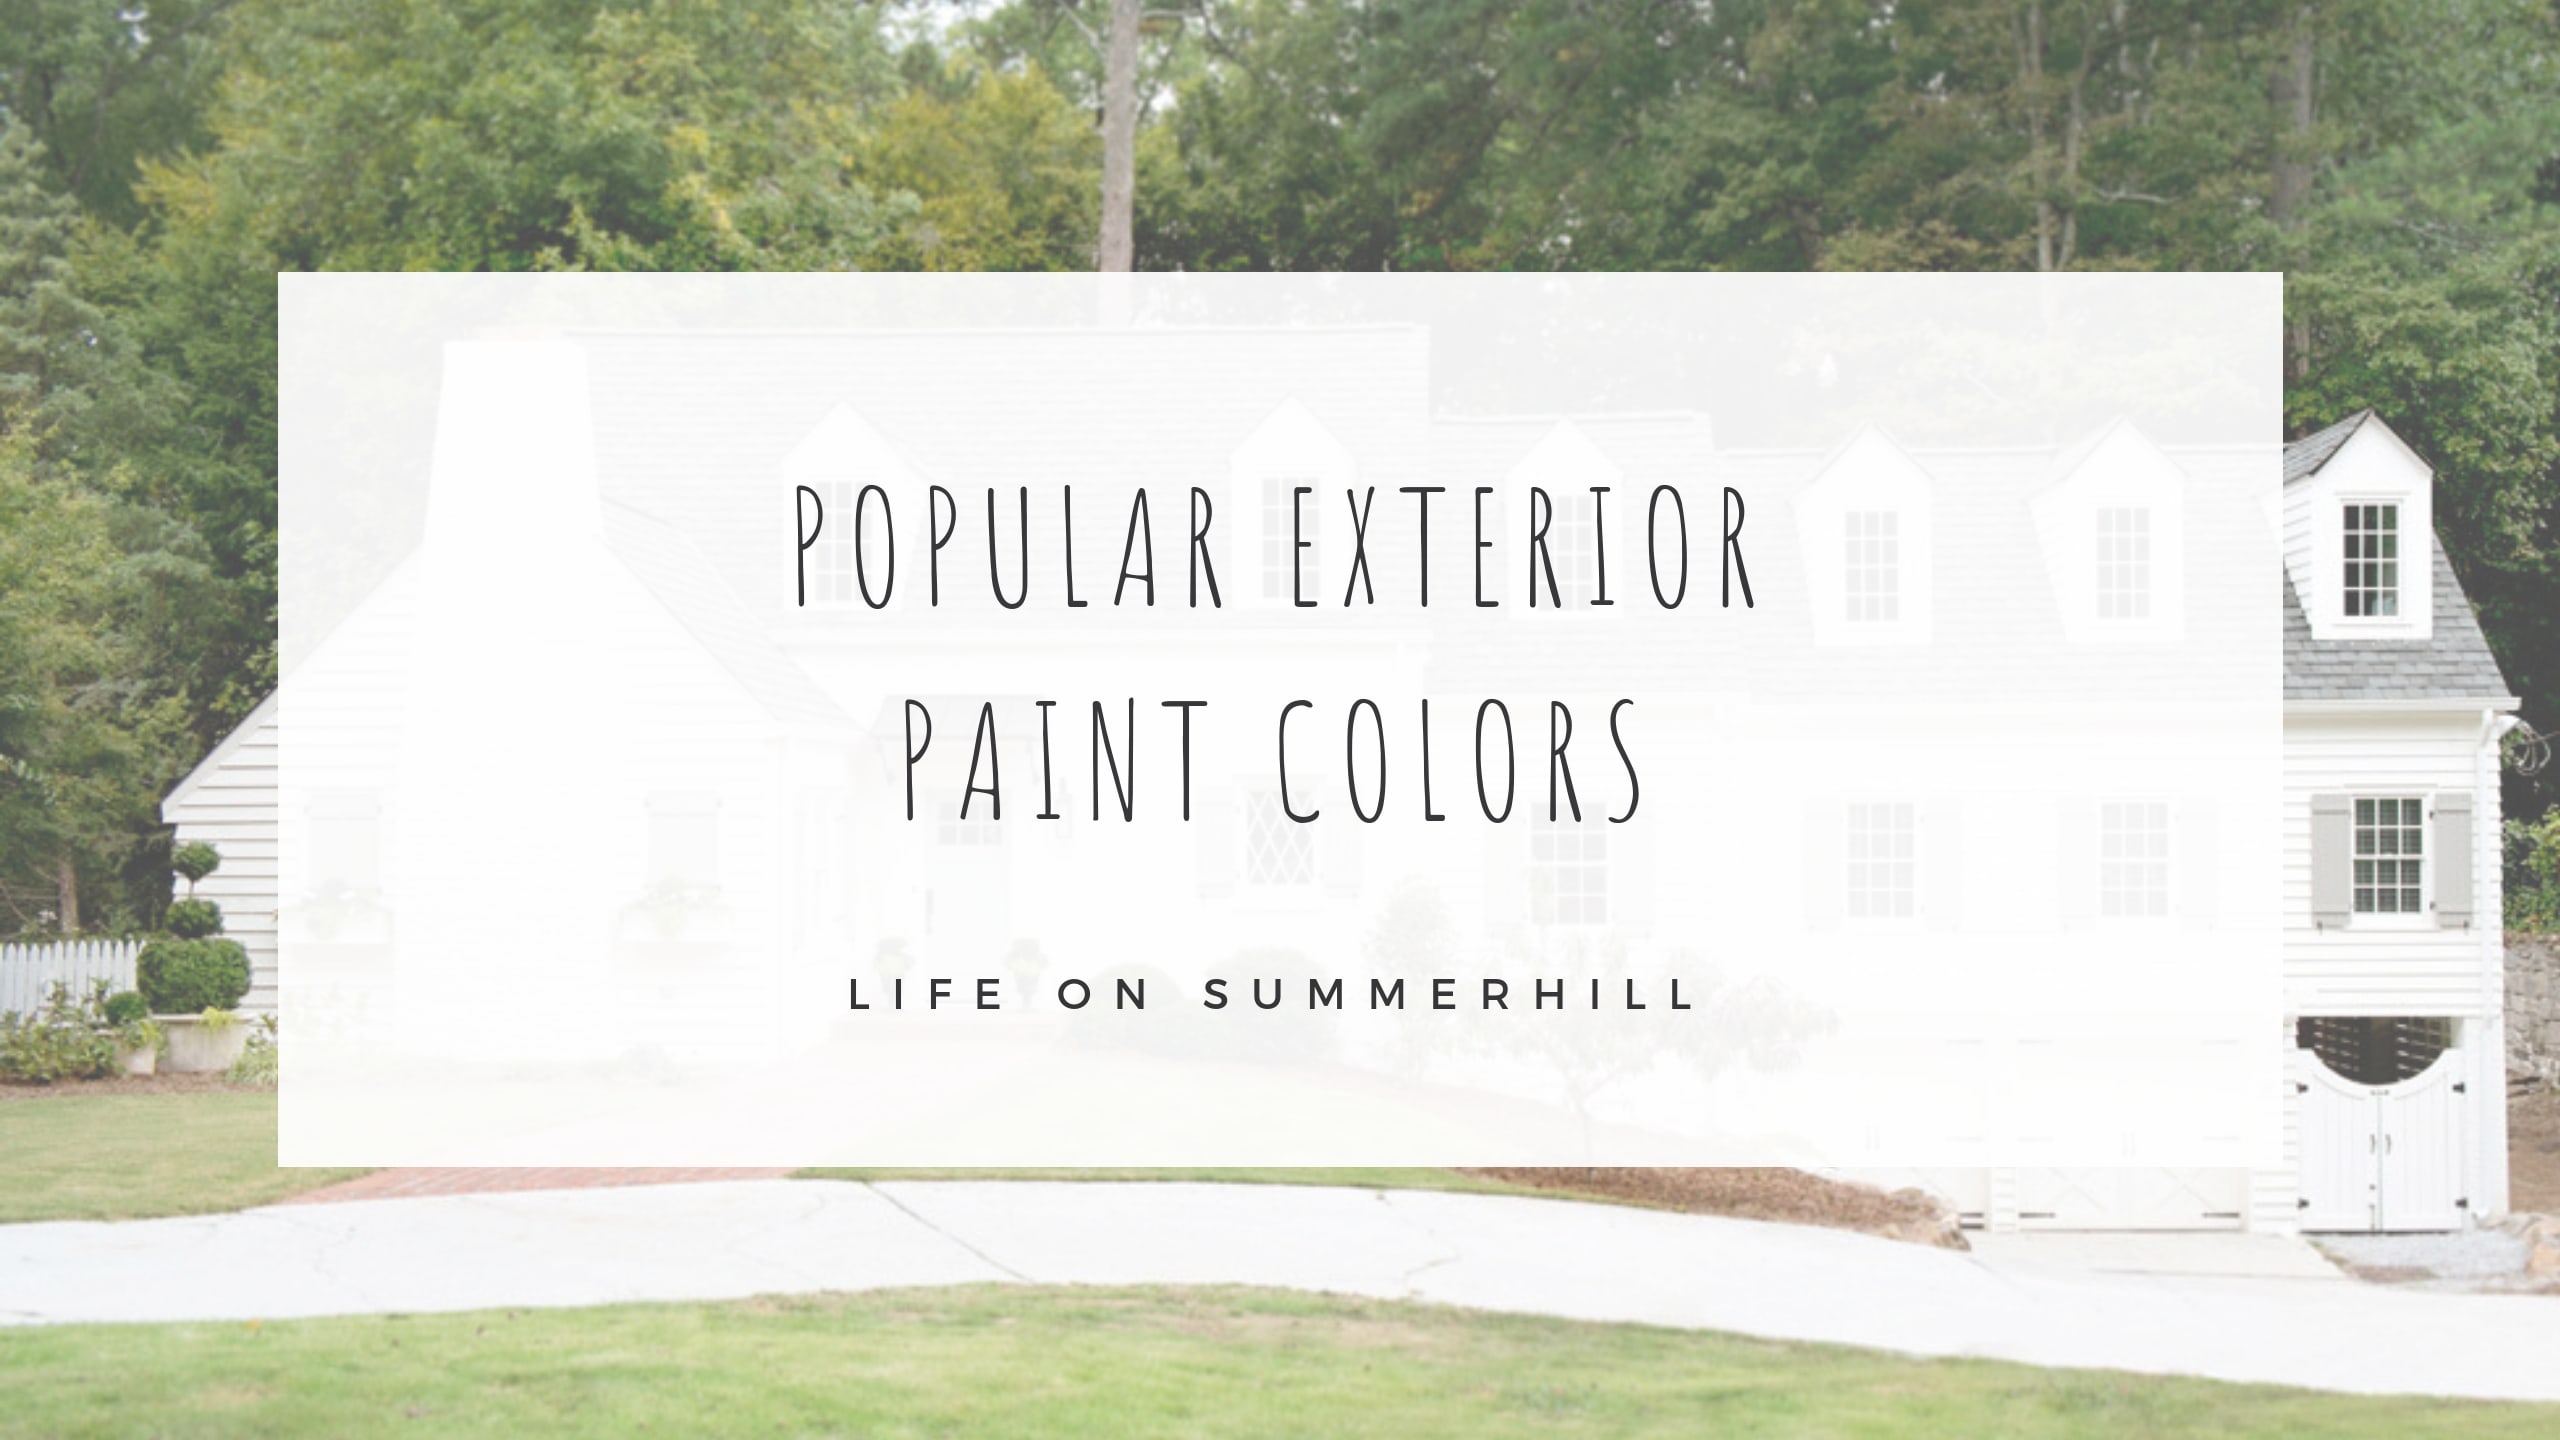 sherwin williams messenger bag - Google Search  House paint exterior, Exterior  paint colors for house, House paint color combination